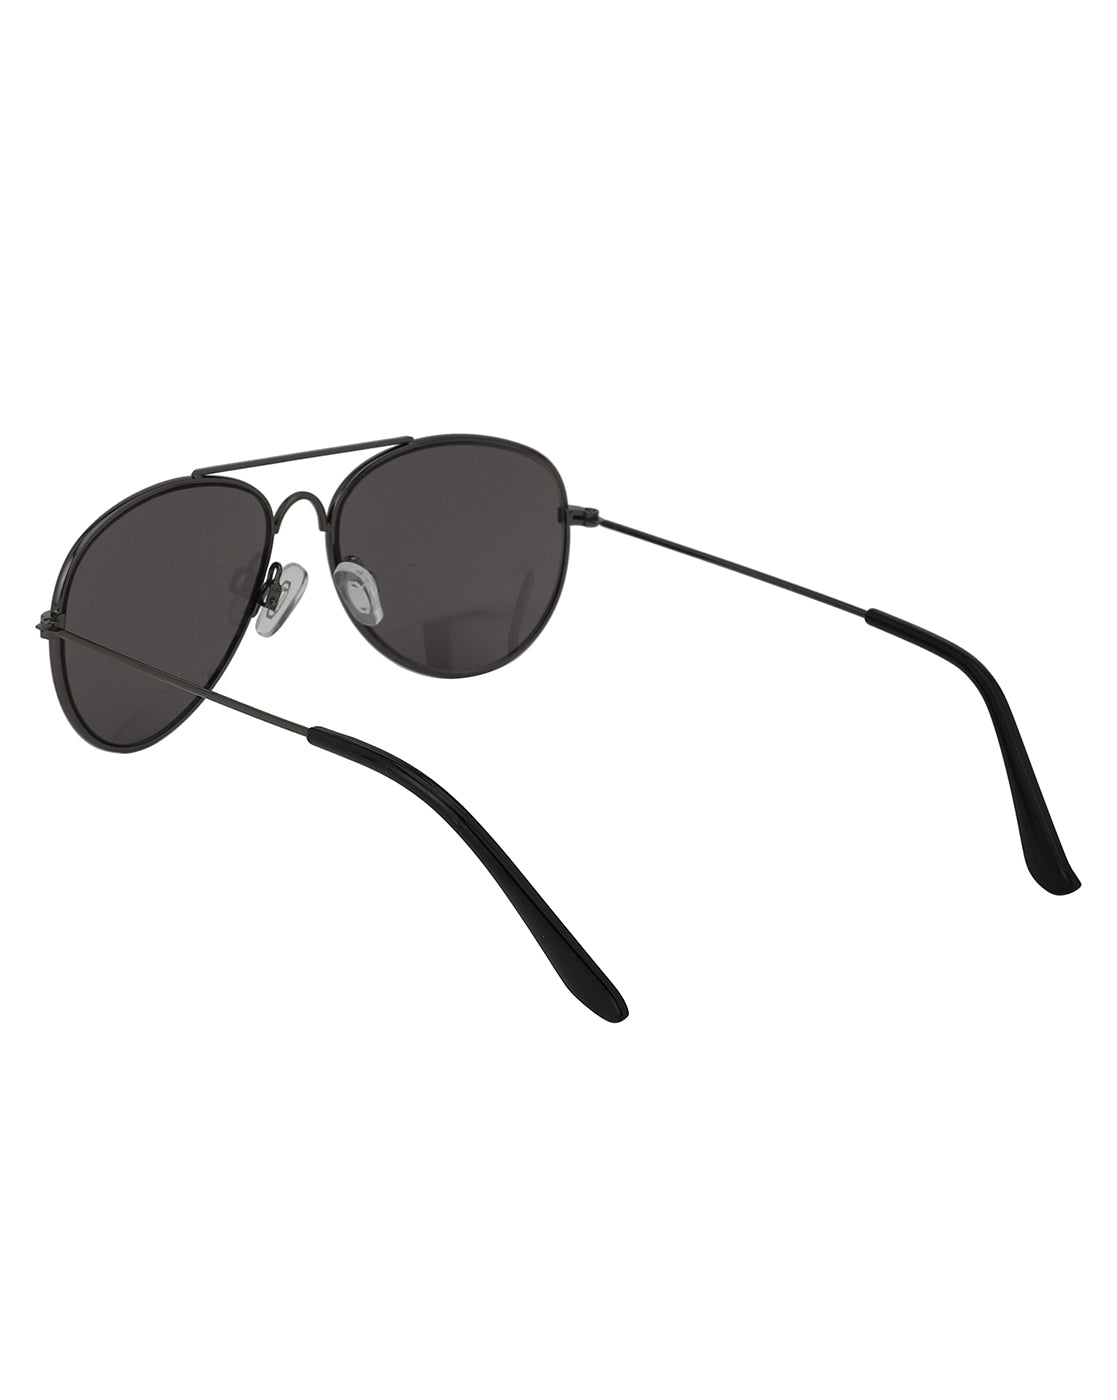 Carlton London Black Lens &amp; Gunmetal-Toned Aviator Sunglasses For Boy